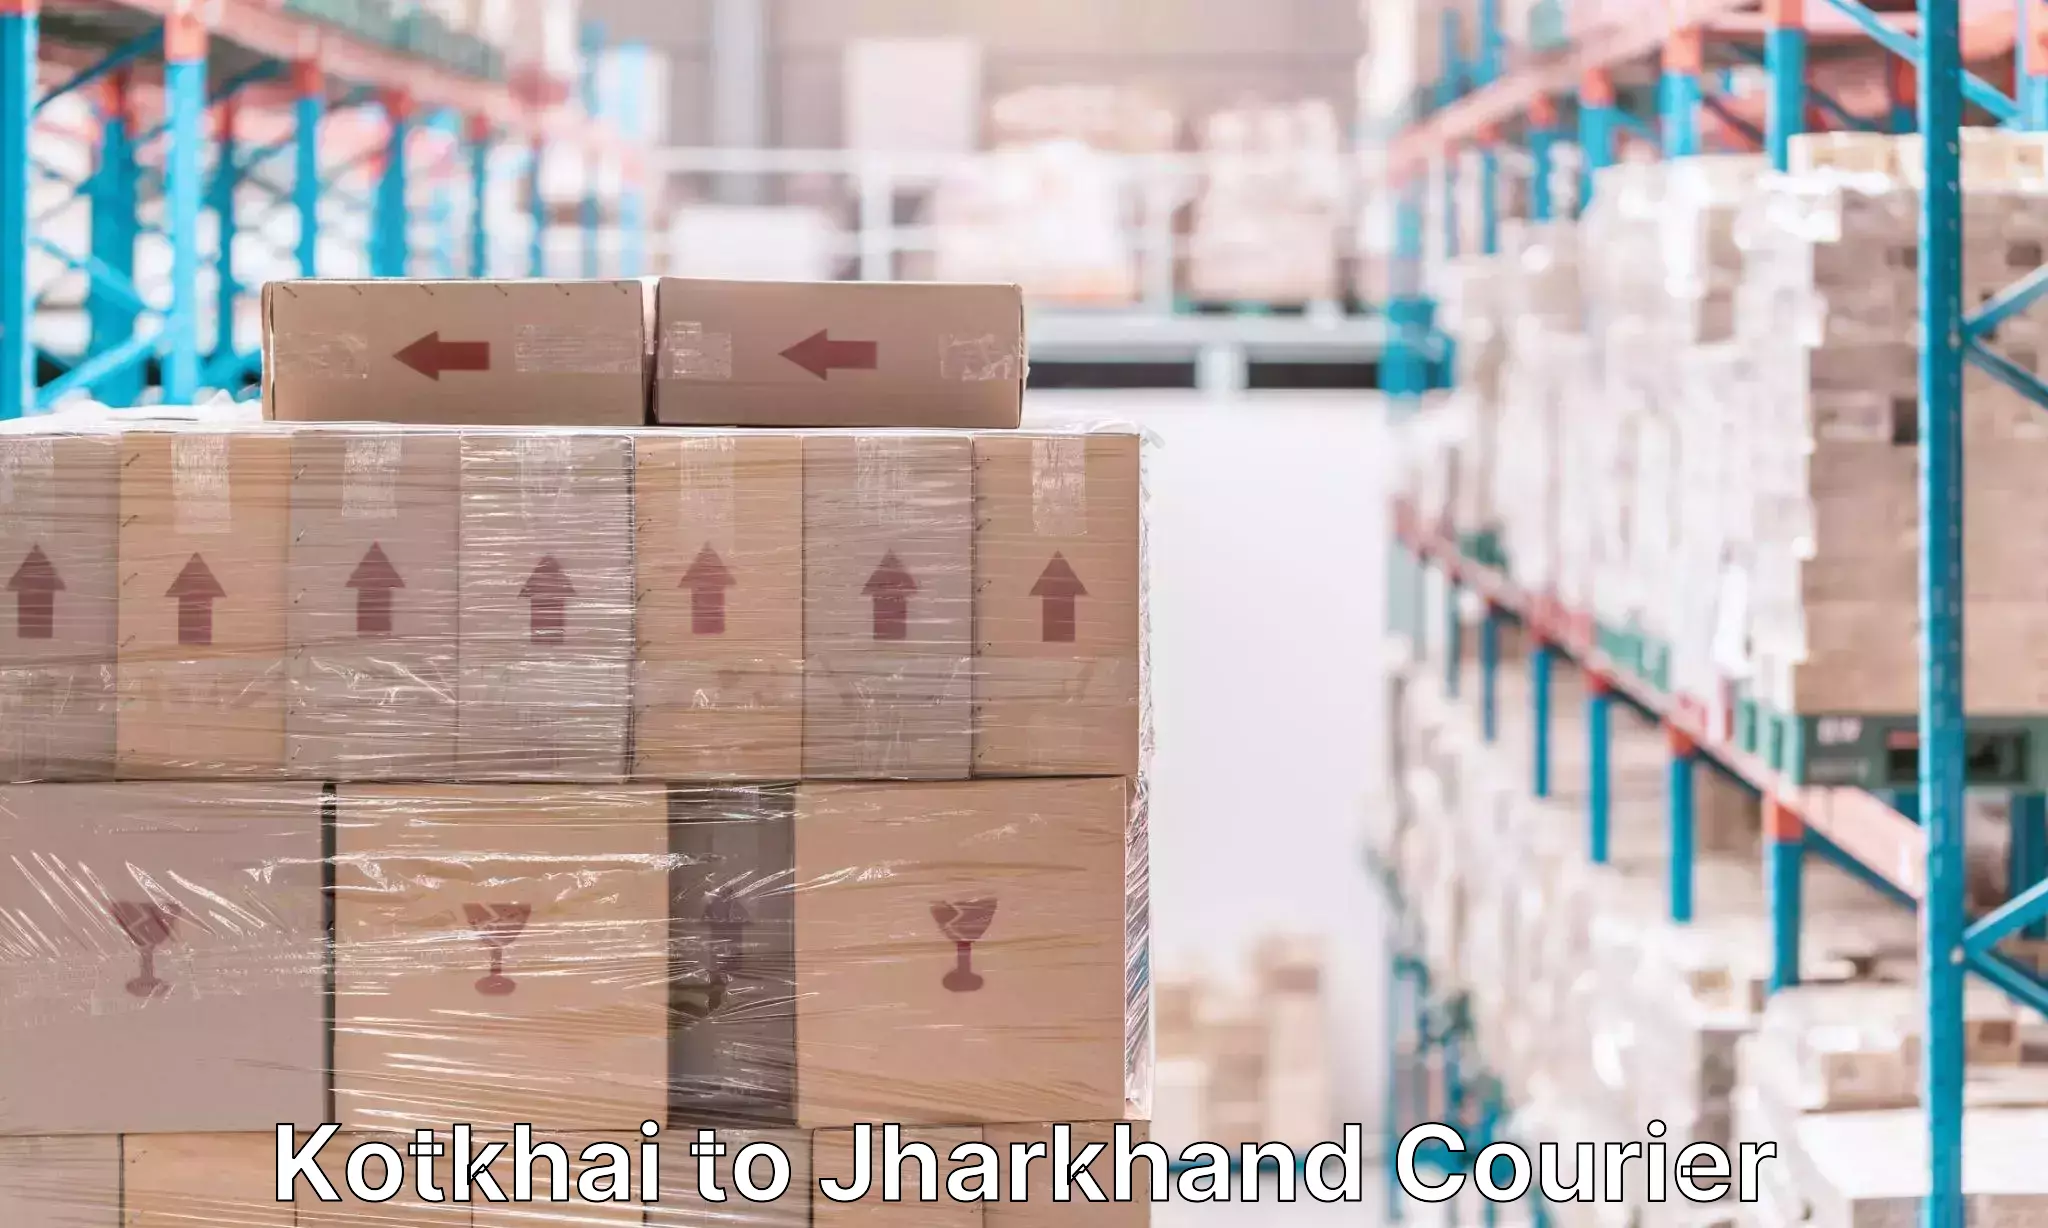 Luggage shipment specialists Kotkhai to Jamshedpur